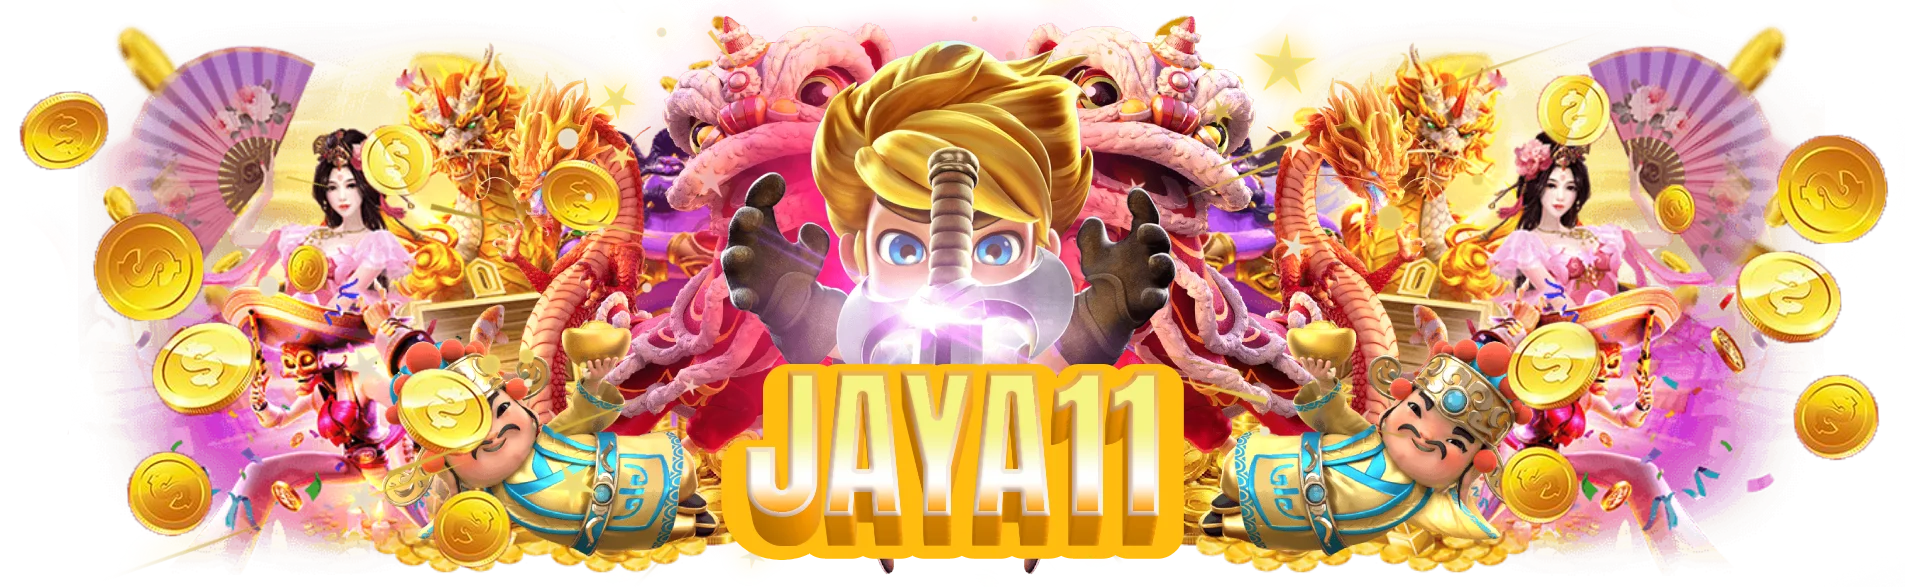 jaya11